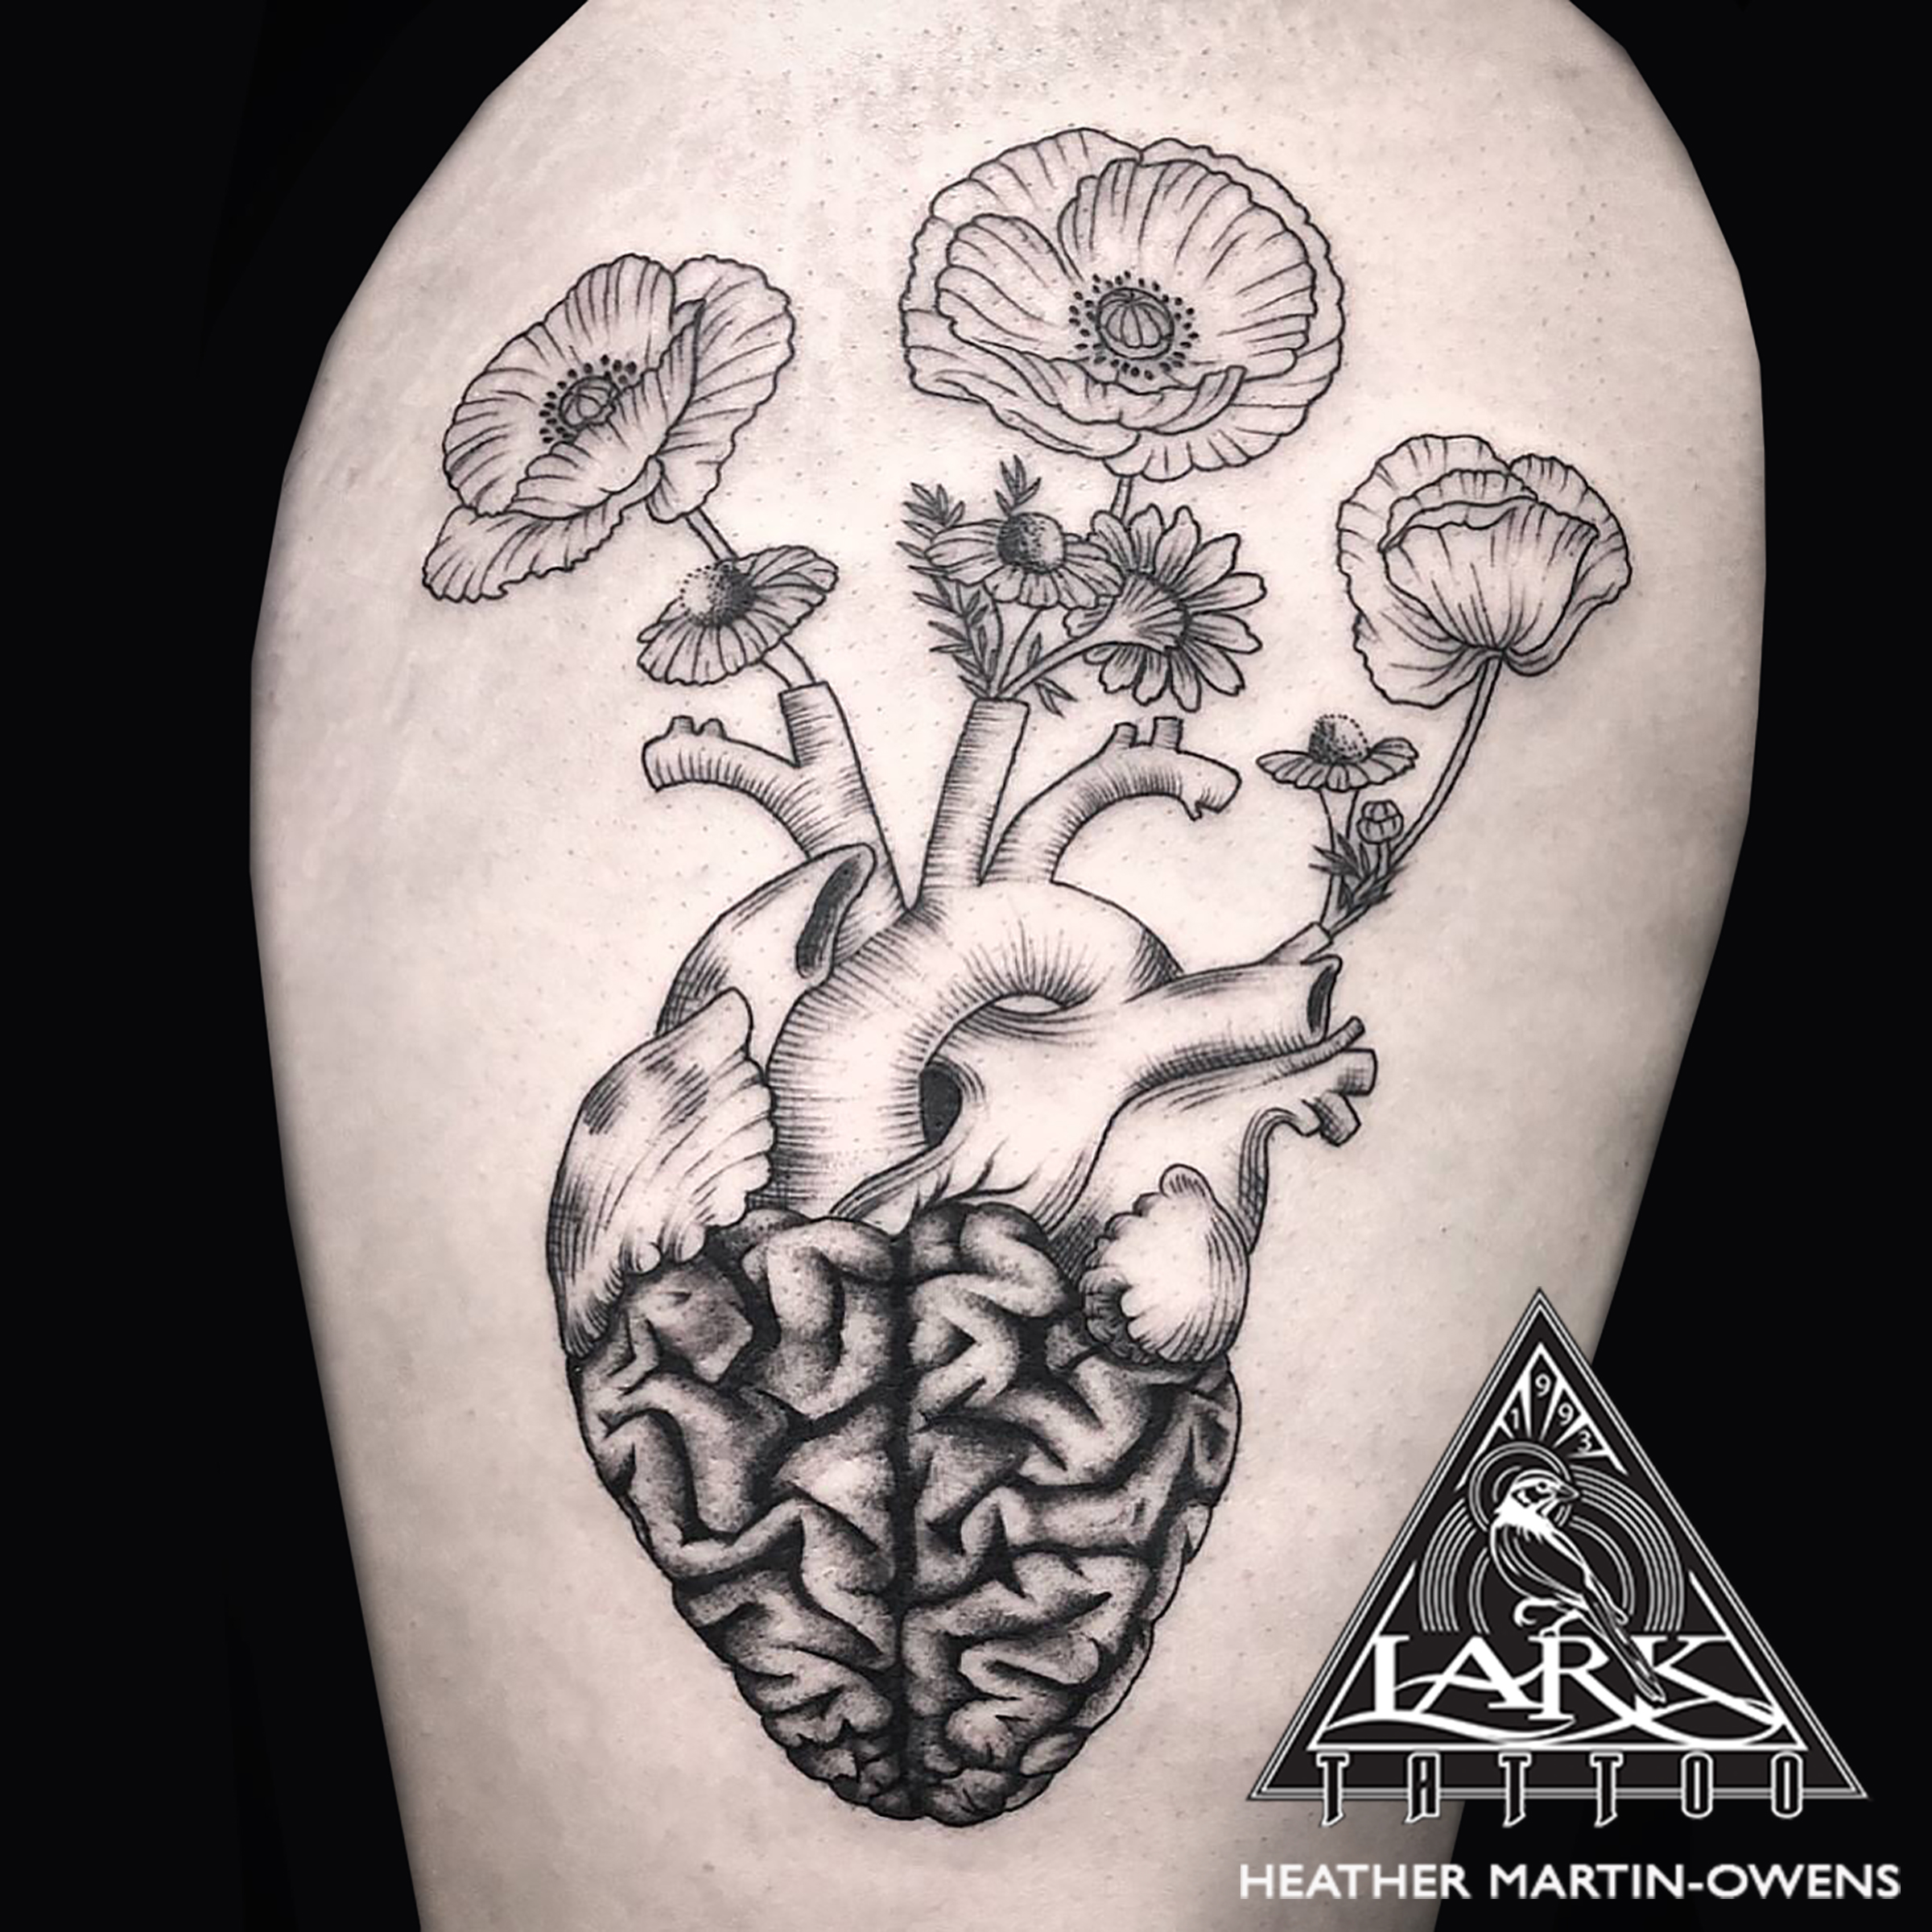 #AnatomicalHeart #AnatomicalHeart #etching #etchingtattoo #bookplate #bookplatetattoo #heart #hearttattoo #dotwork #dotworktattoo #tattoodotwork #flowertattoo #bngtattoo #blackandgraytattoo #blackandgreytattoo #bngsociety #braintattoo #AnatomicalBrain #AnatomicalBrainTattoo #tattoo #tattoos #tat #tats #tatts #tatted #tattedup #tattoist #tattooed #inked #inkedup #ink #tattoooftheday #amazingink #bodyart #tattooig #tattoosofinstagram #instatats #larktattoo #larktattoos #larktattoowestbury #westbury #longisland #NY #NewYork #usa #art